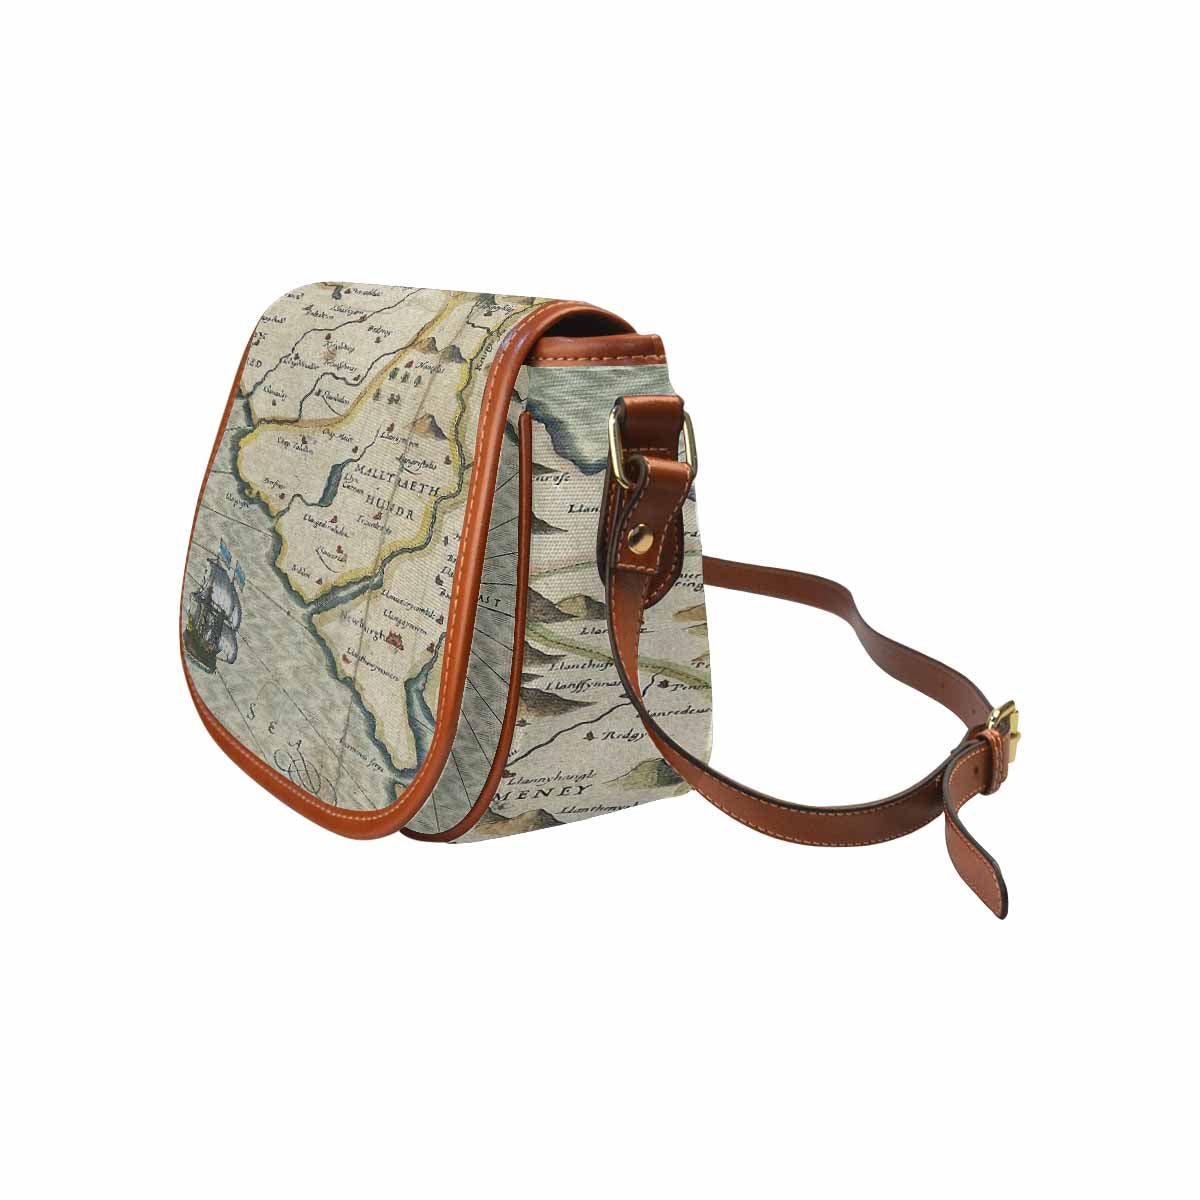 Antique Map design Handbag, saddle bag, Design 13